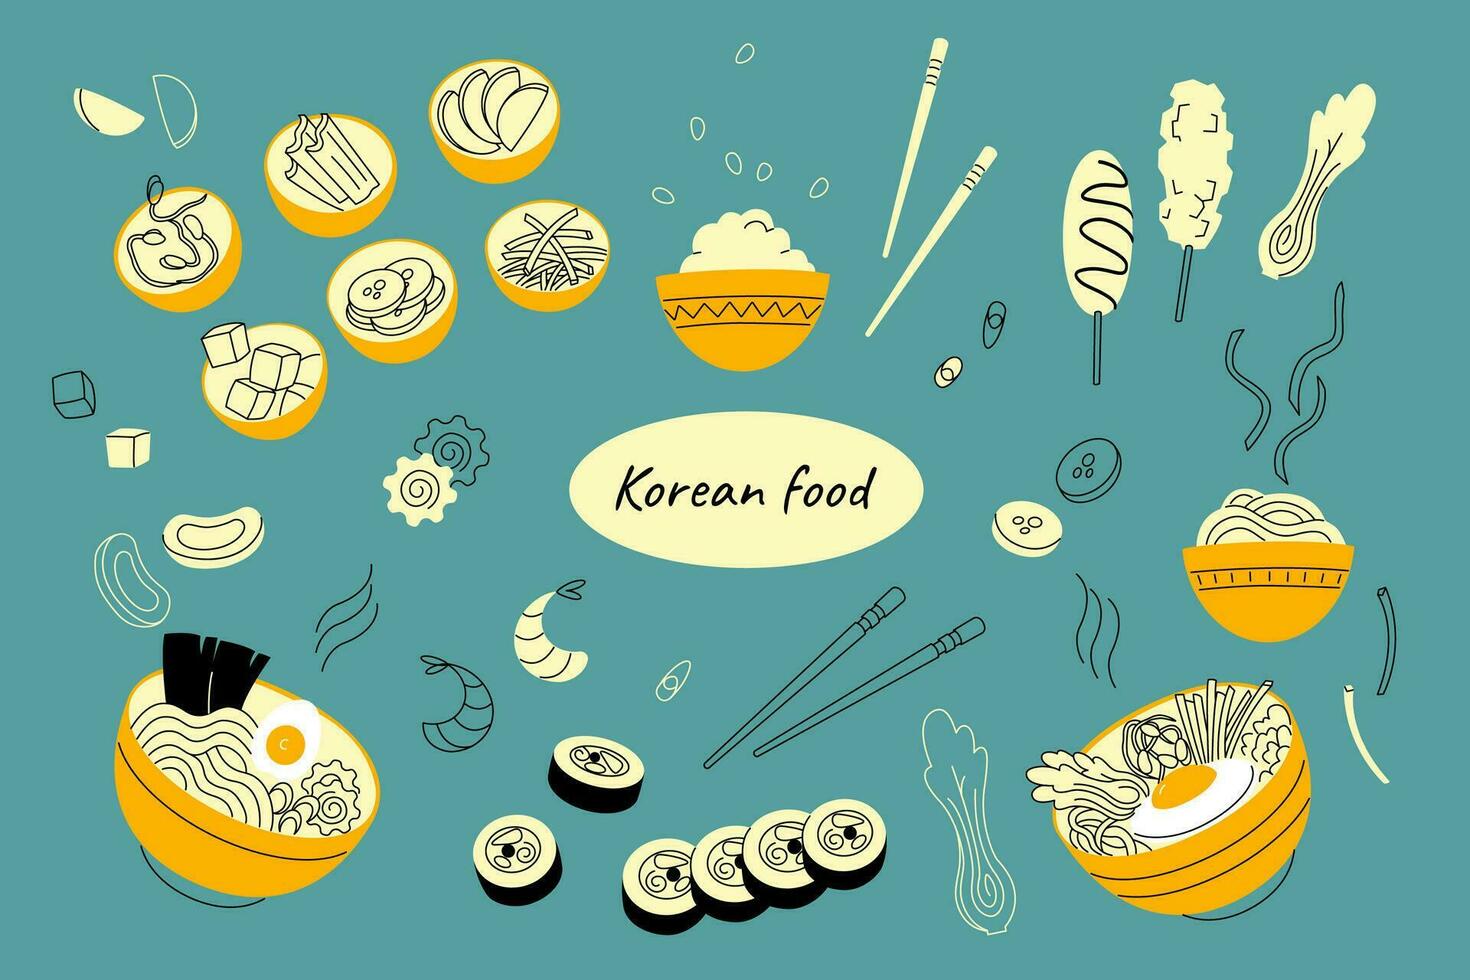 coreano comida plano vector ilustración conjunto tradicional platos ramen bibimbap kimchi en escabeche bocadillo